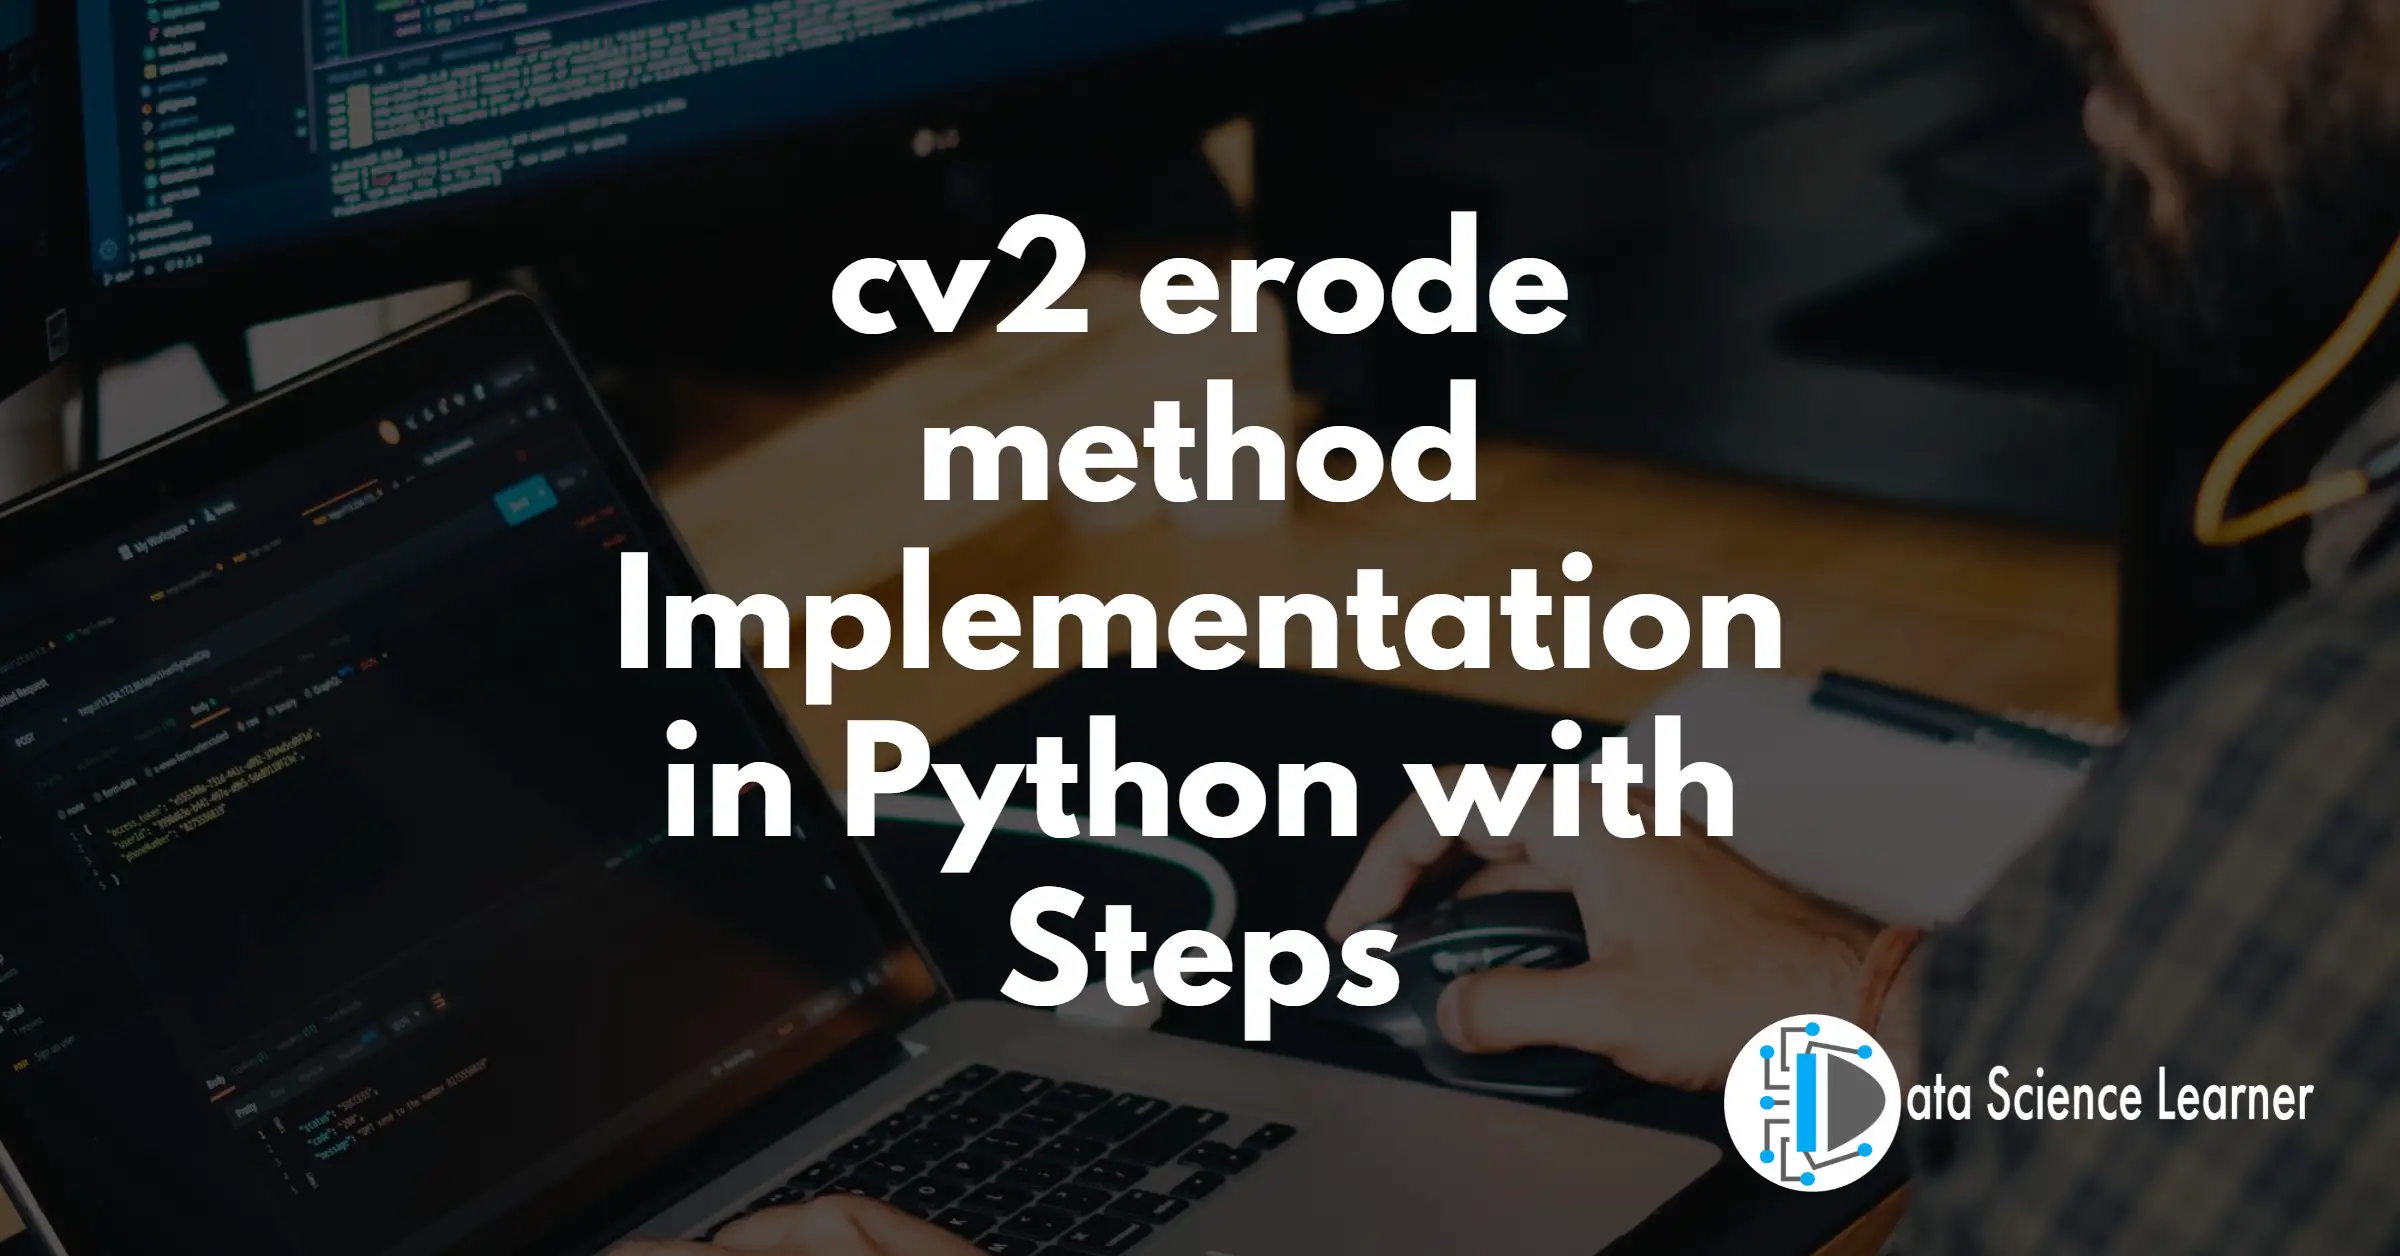 cv2 erode method Implementation in Python with Steps